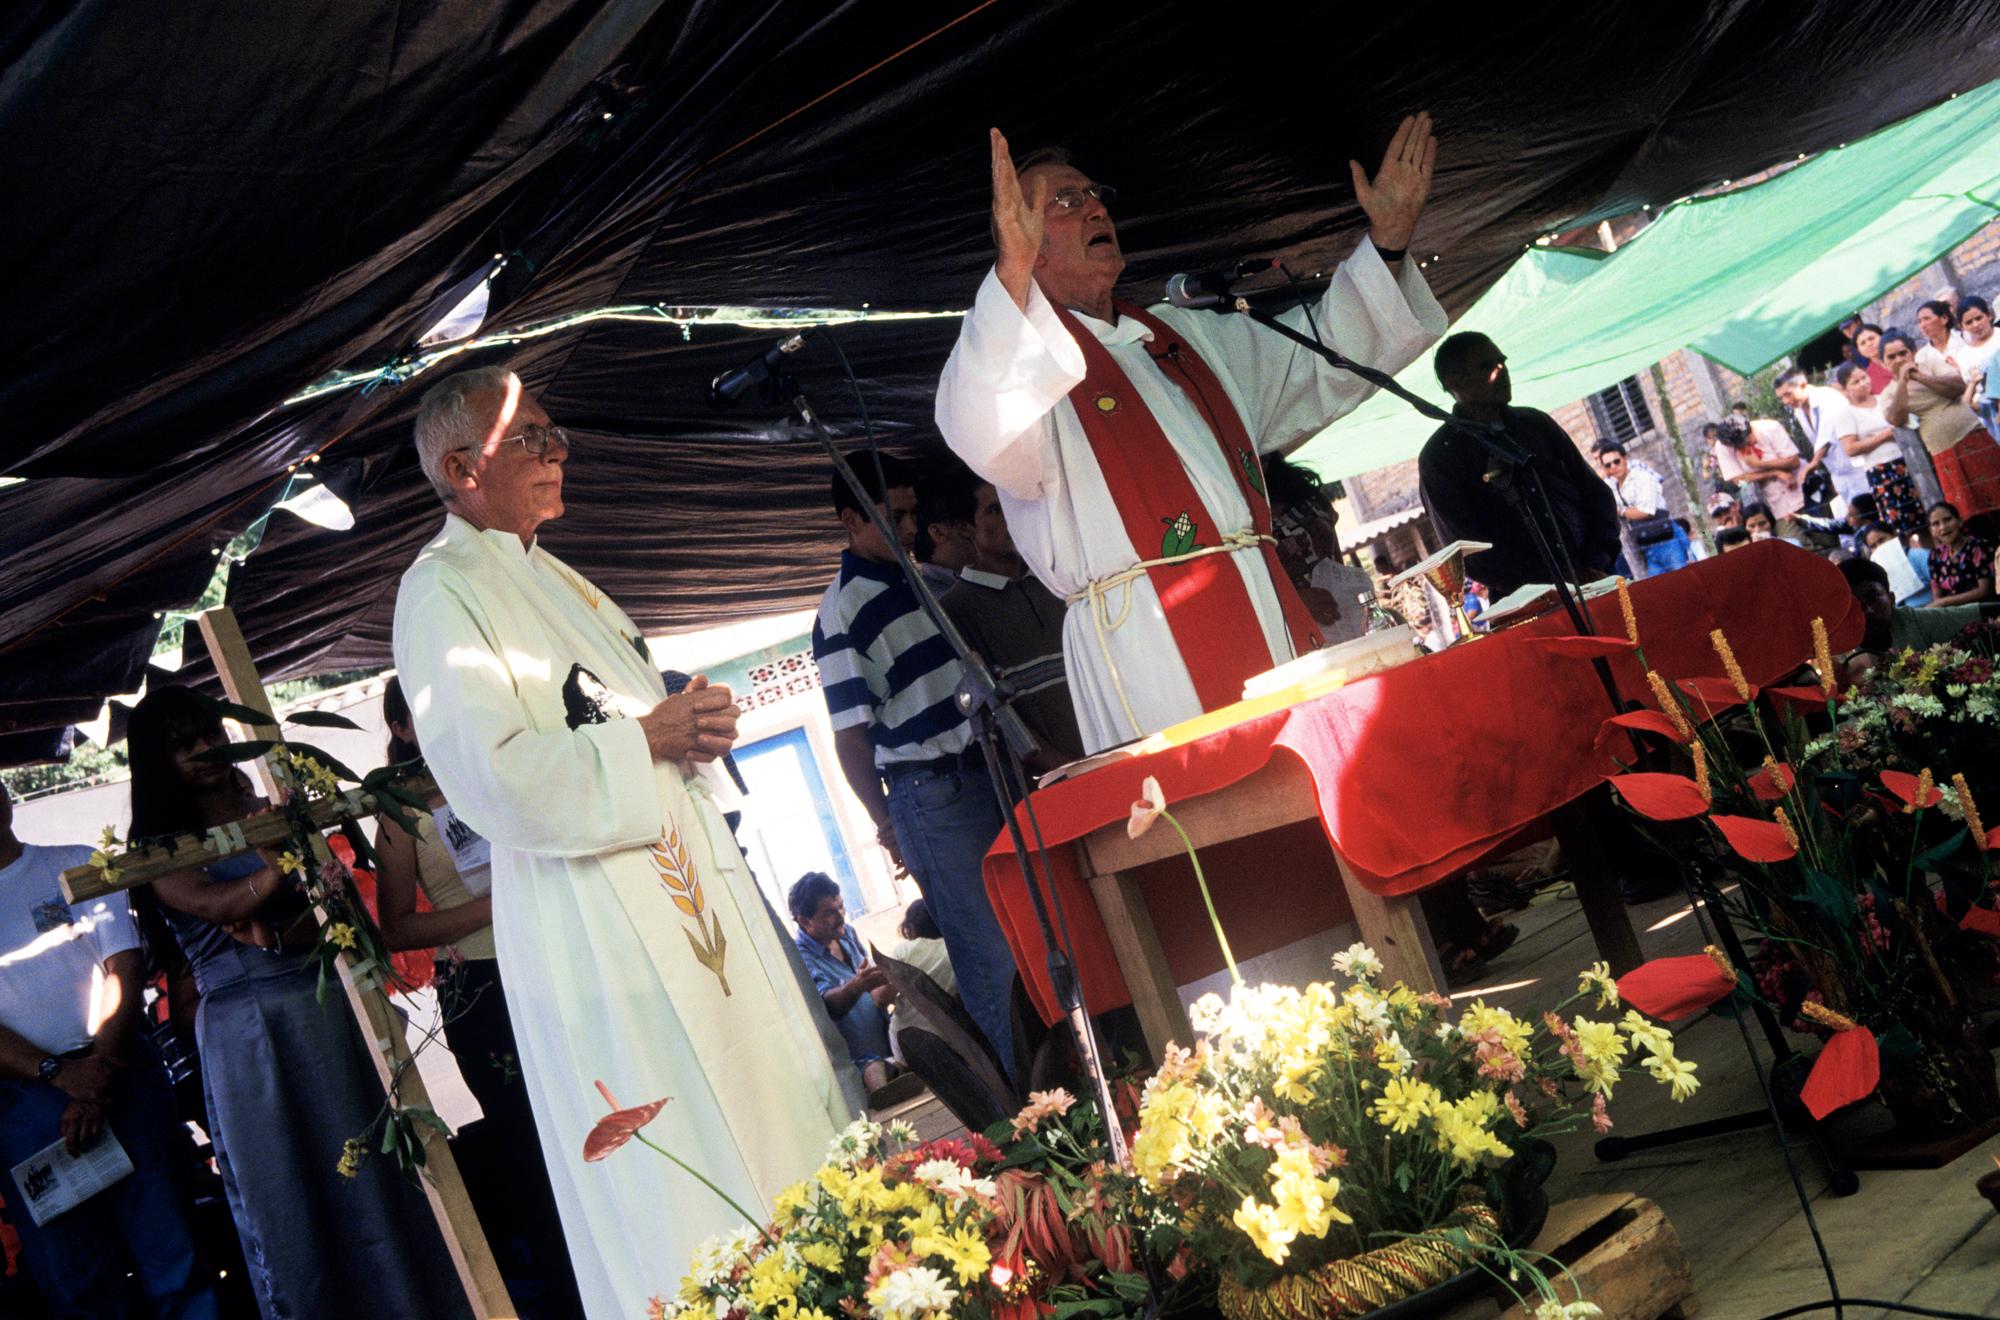 El Salvador Anniversary - Padre Rogelio Ponceland Padre Pedro, both Belgian priests...